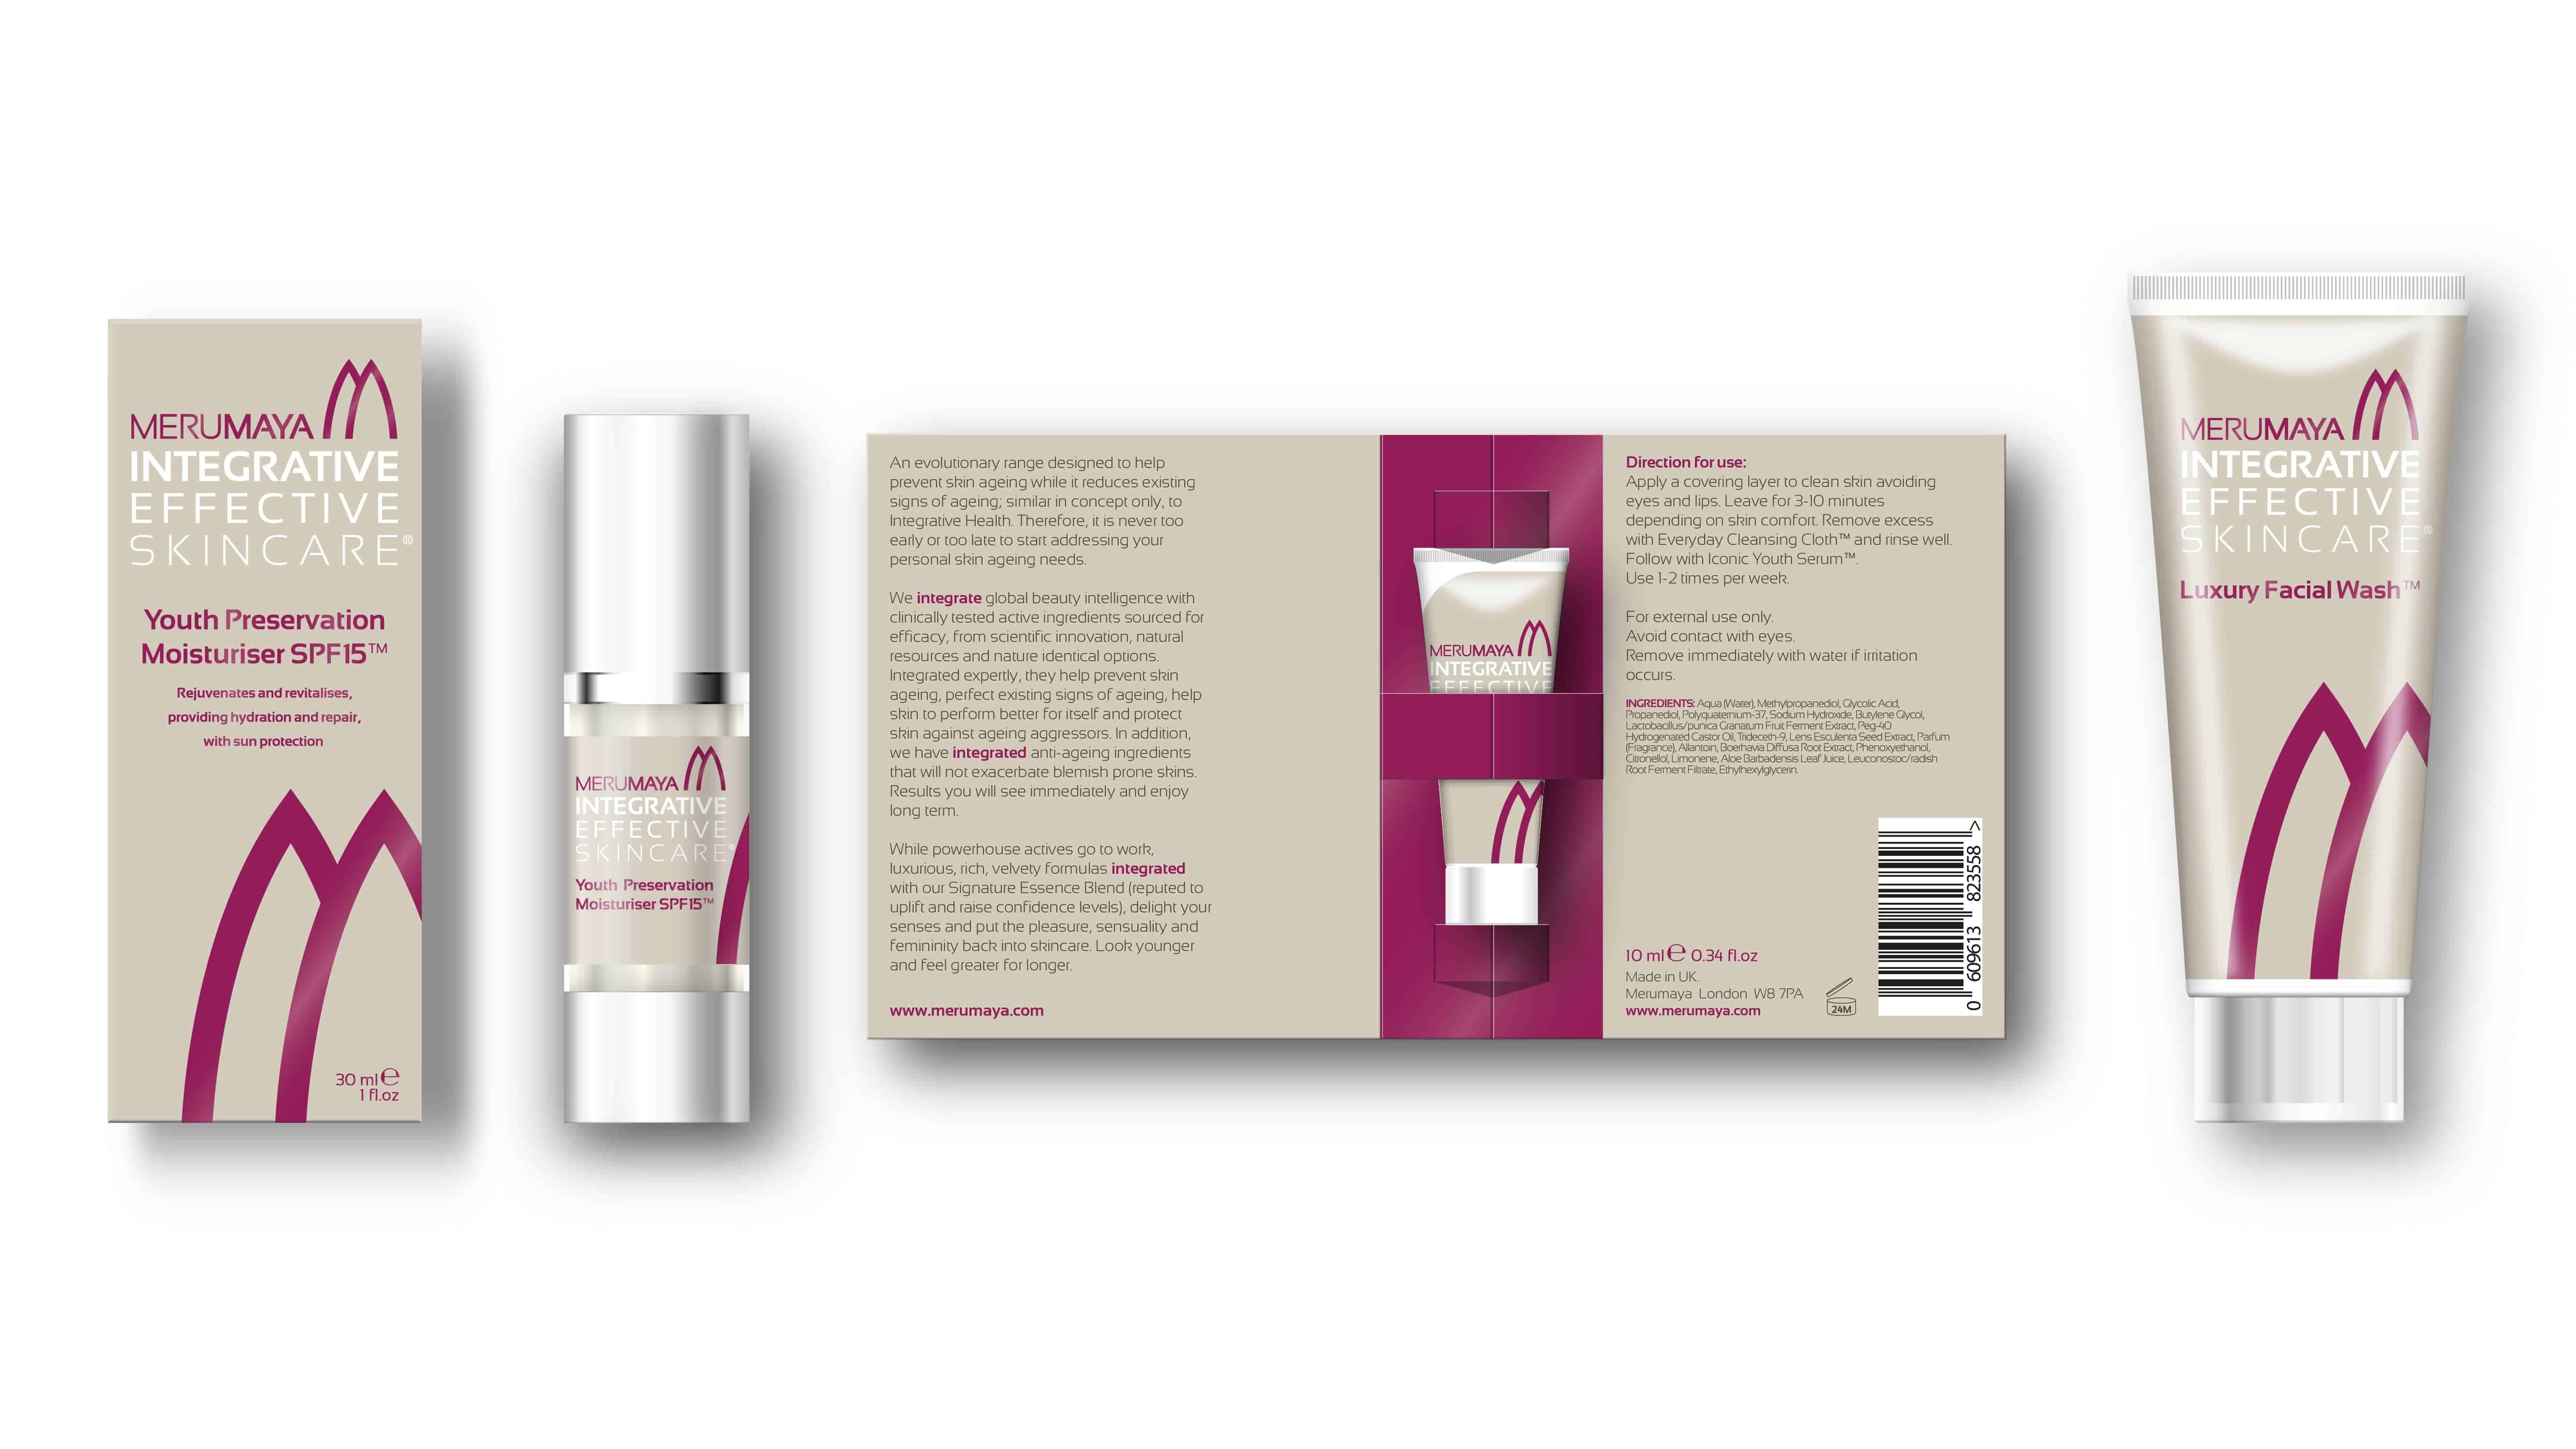 Merumaya skincare product graphics, packaging and logo design visual by Paul Cartwright Branding.